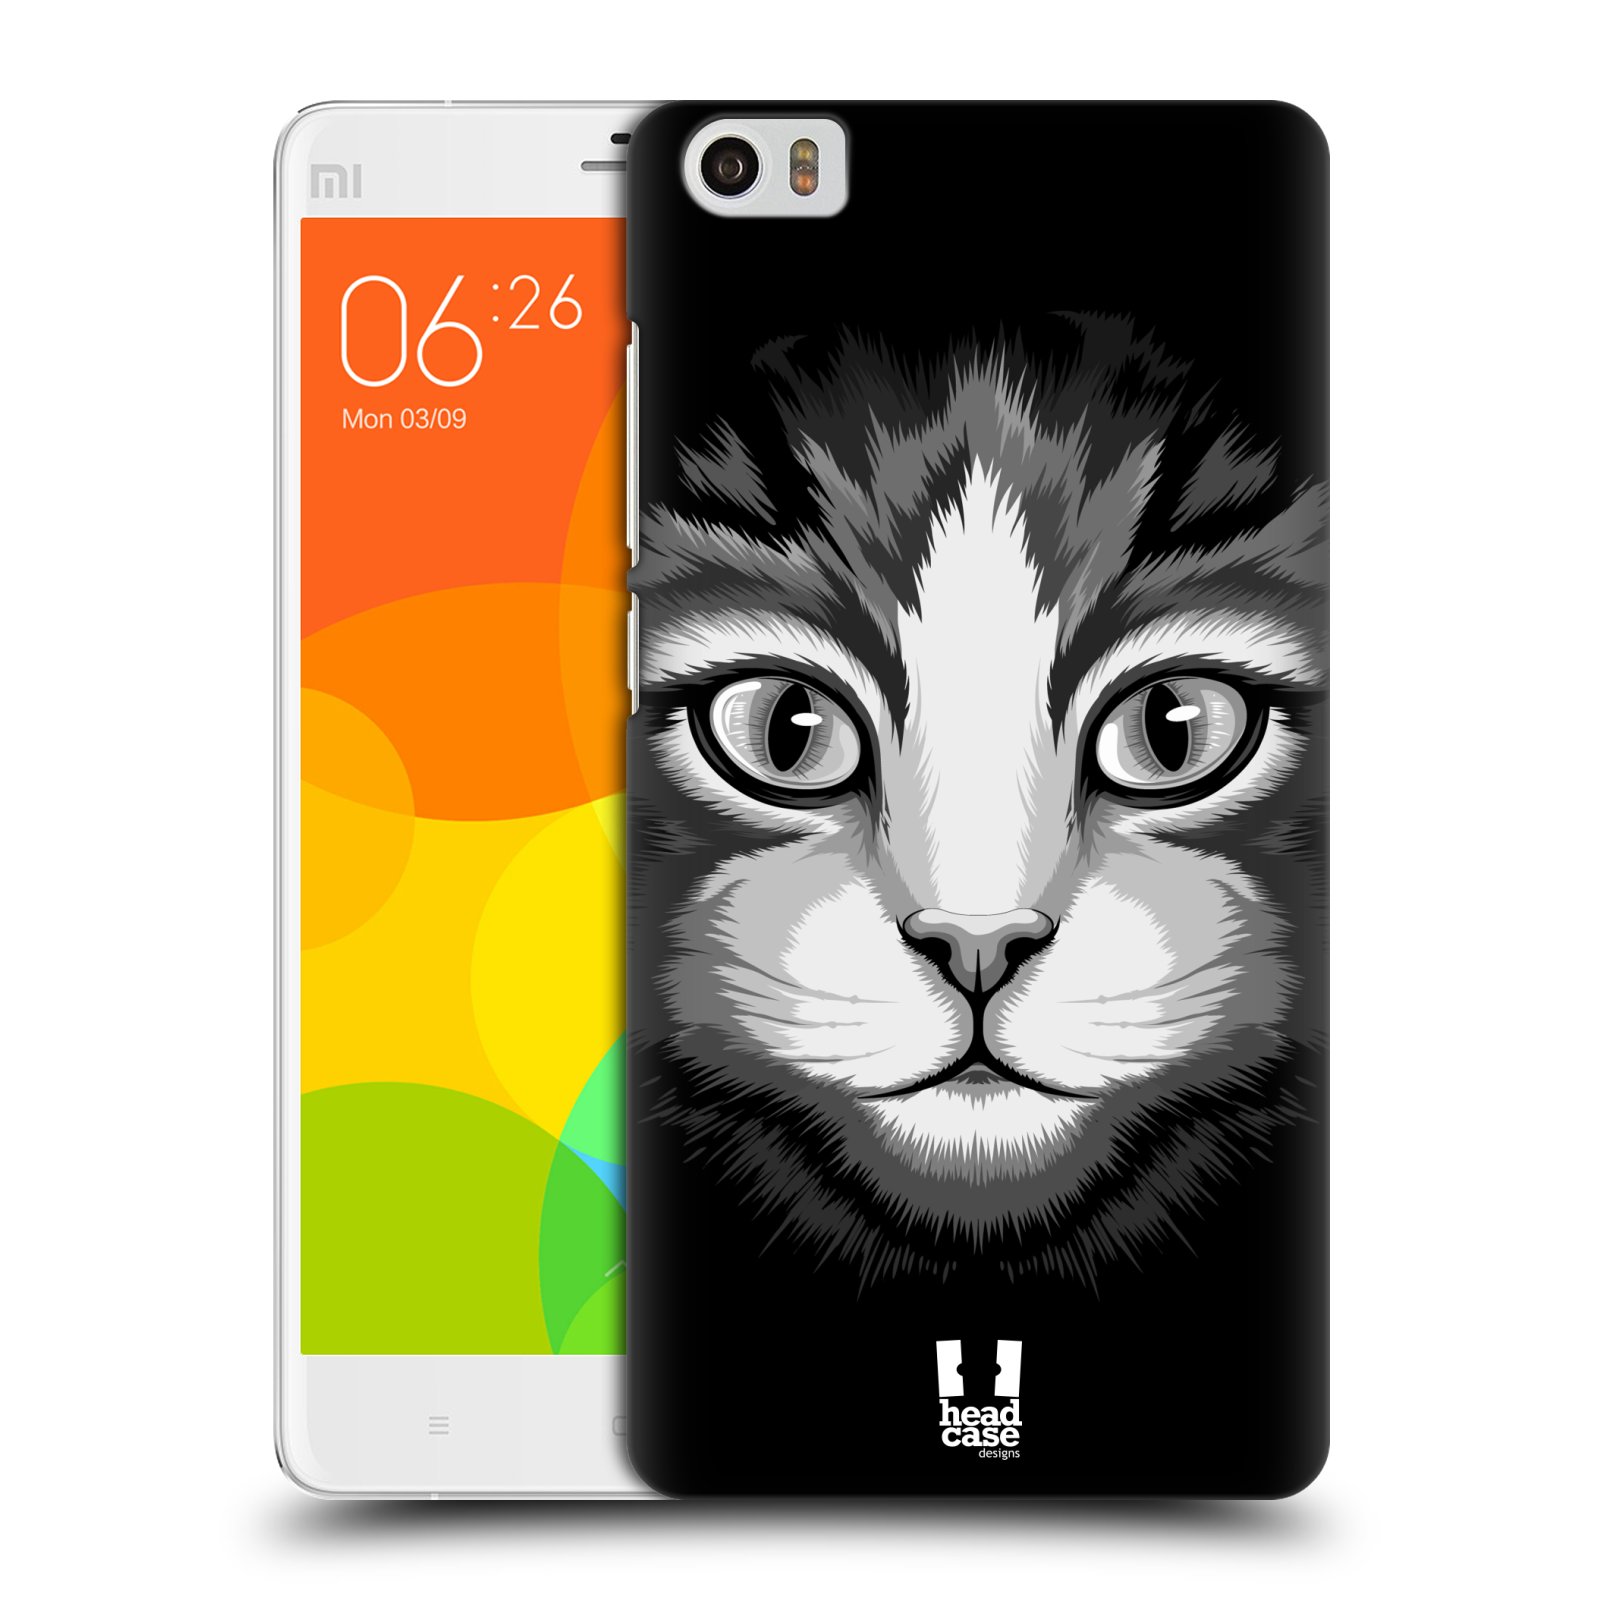 HEAD CASE pevný plastový obal na mobil XIAOMI Mi Note vzor Zvíře kreslená tvář 2 kočička